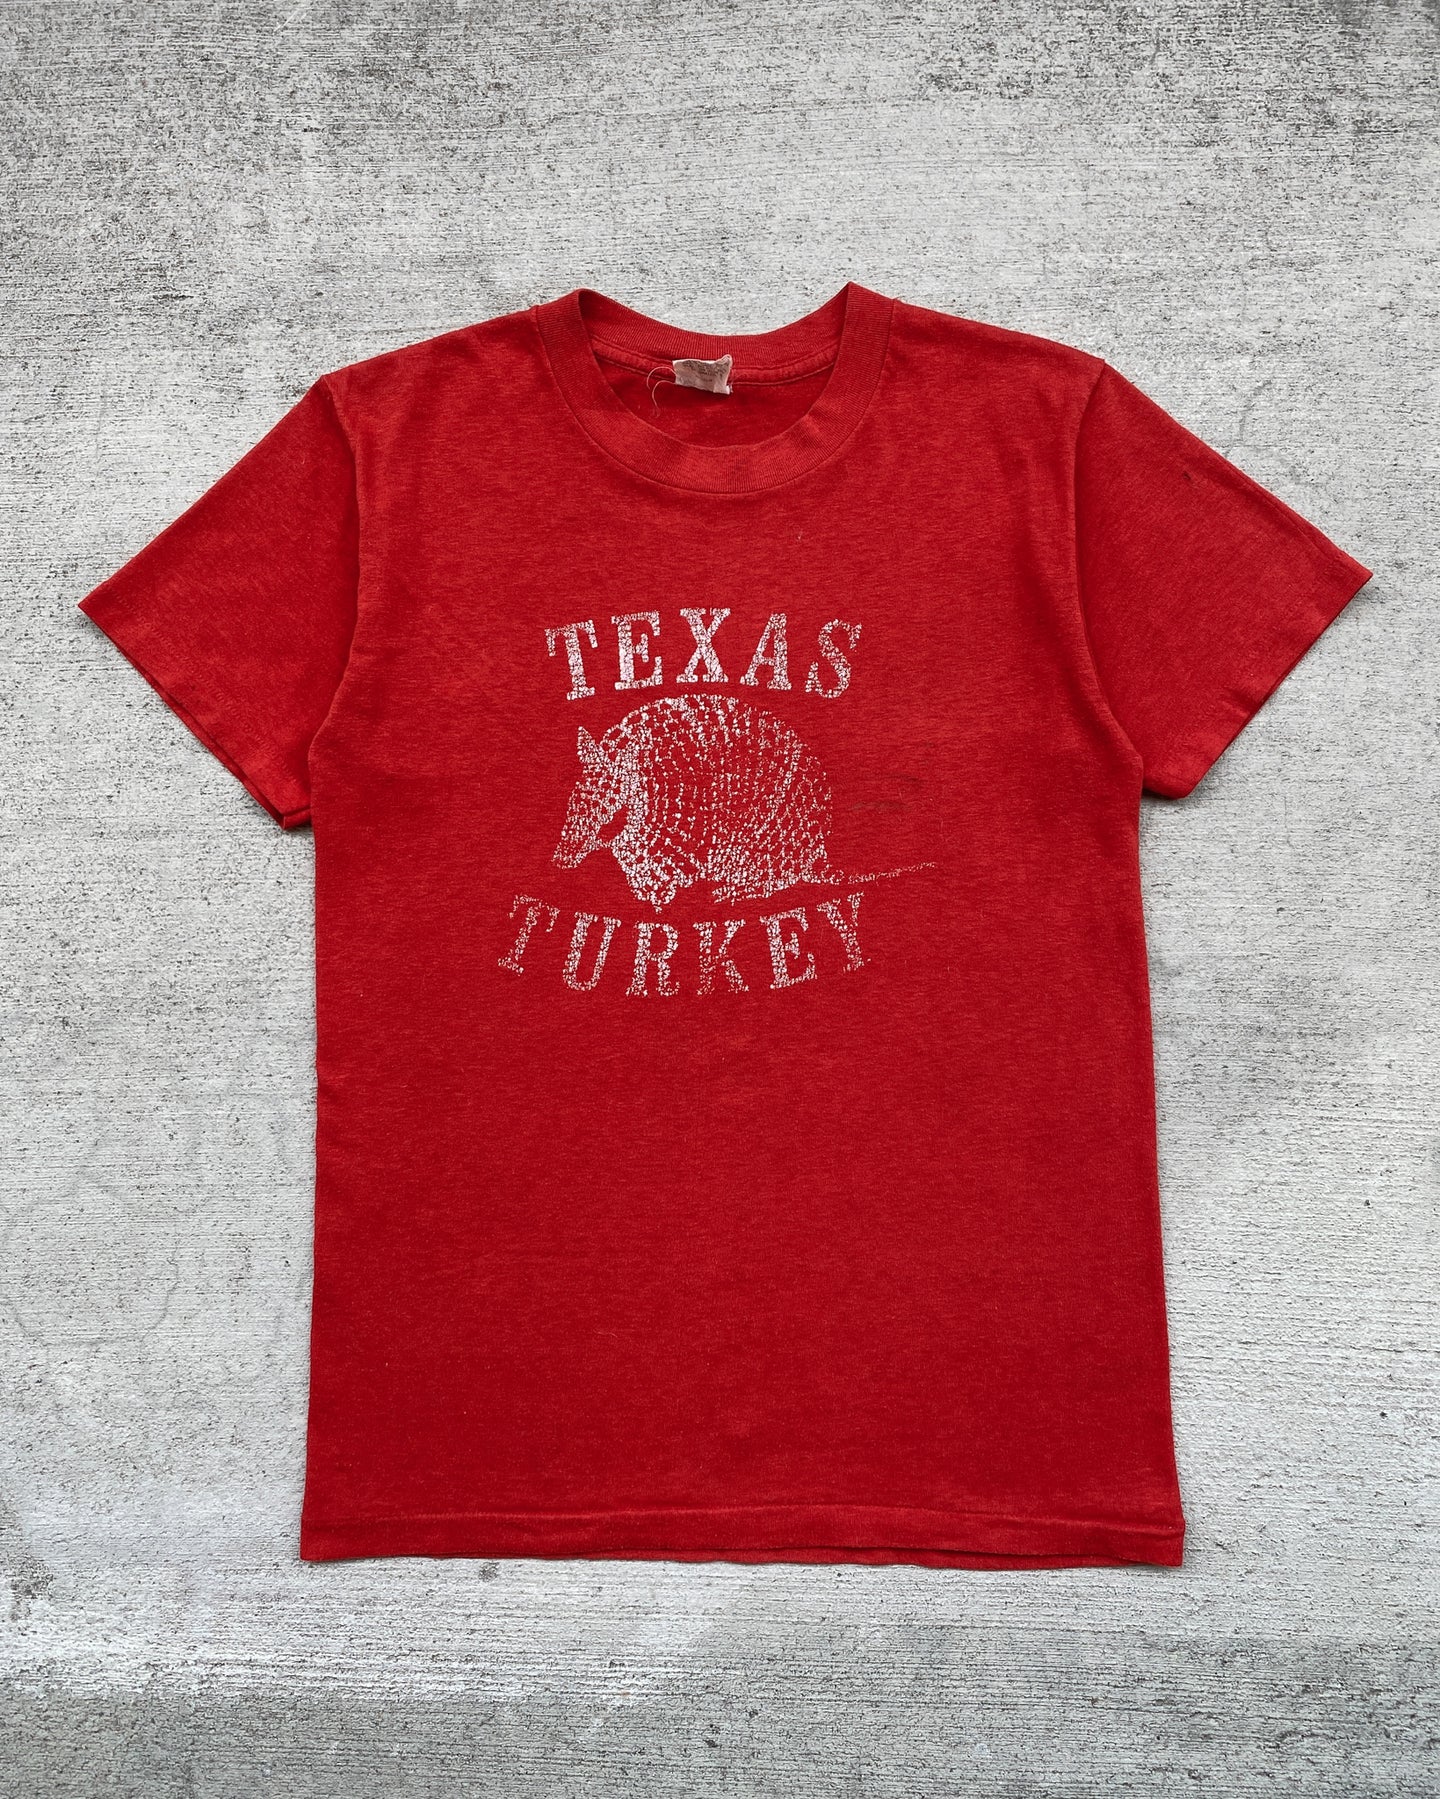 1980s Texas Turkey Single Stitch Tee - Size Medium